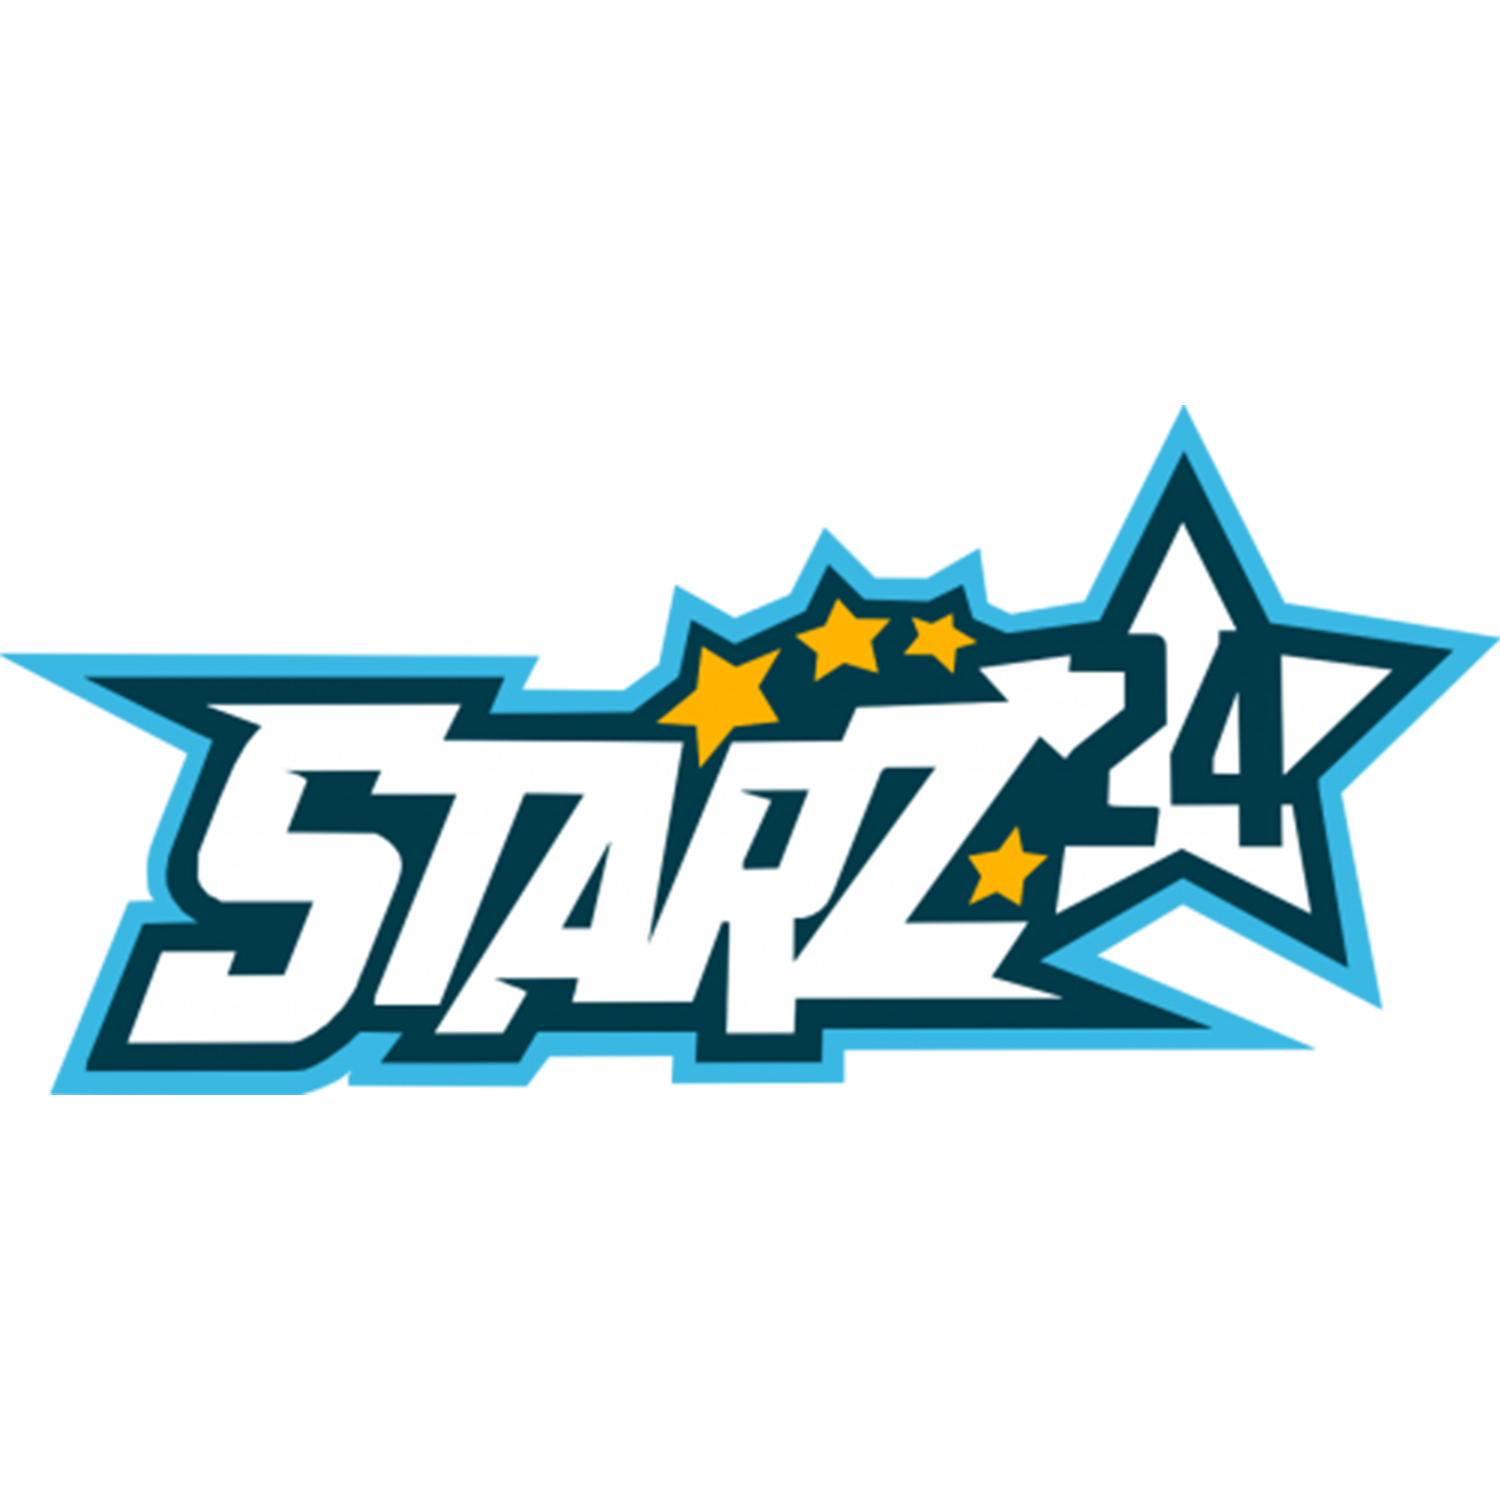 Starz24 Logo